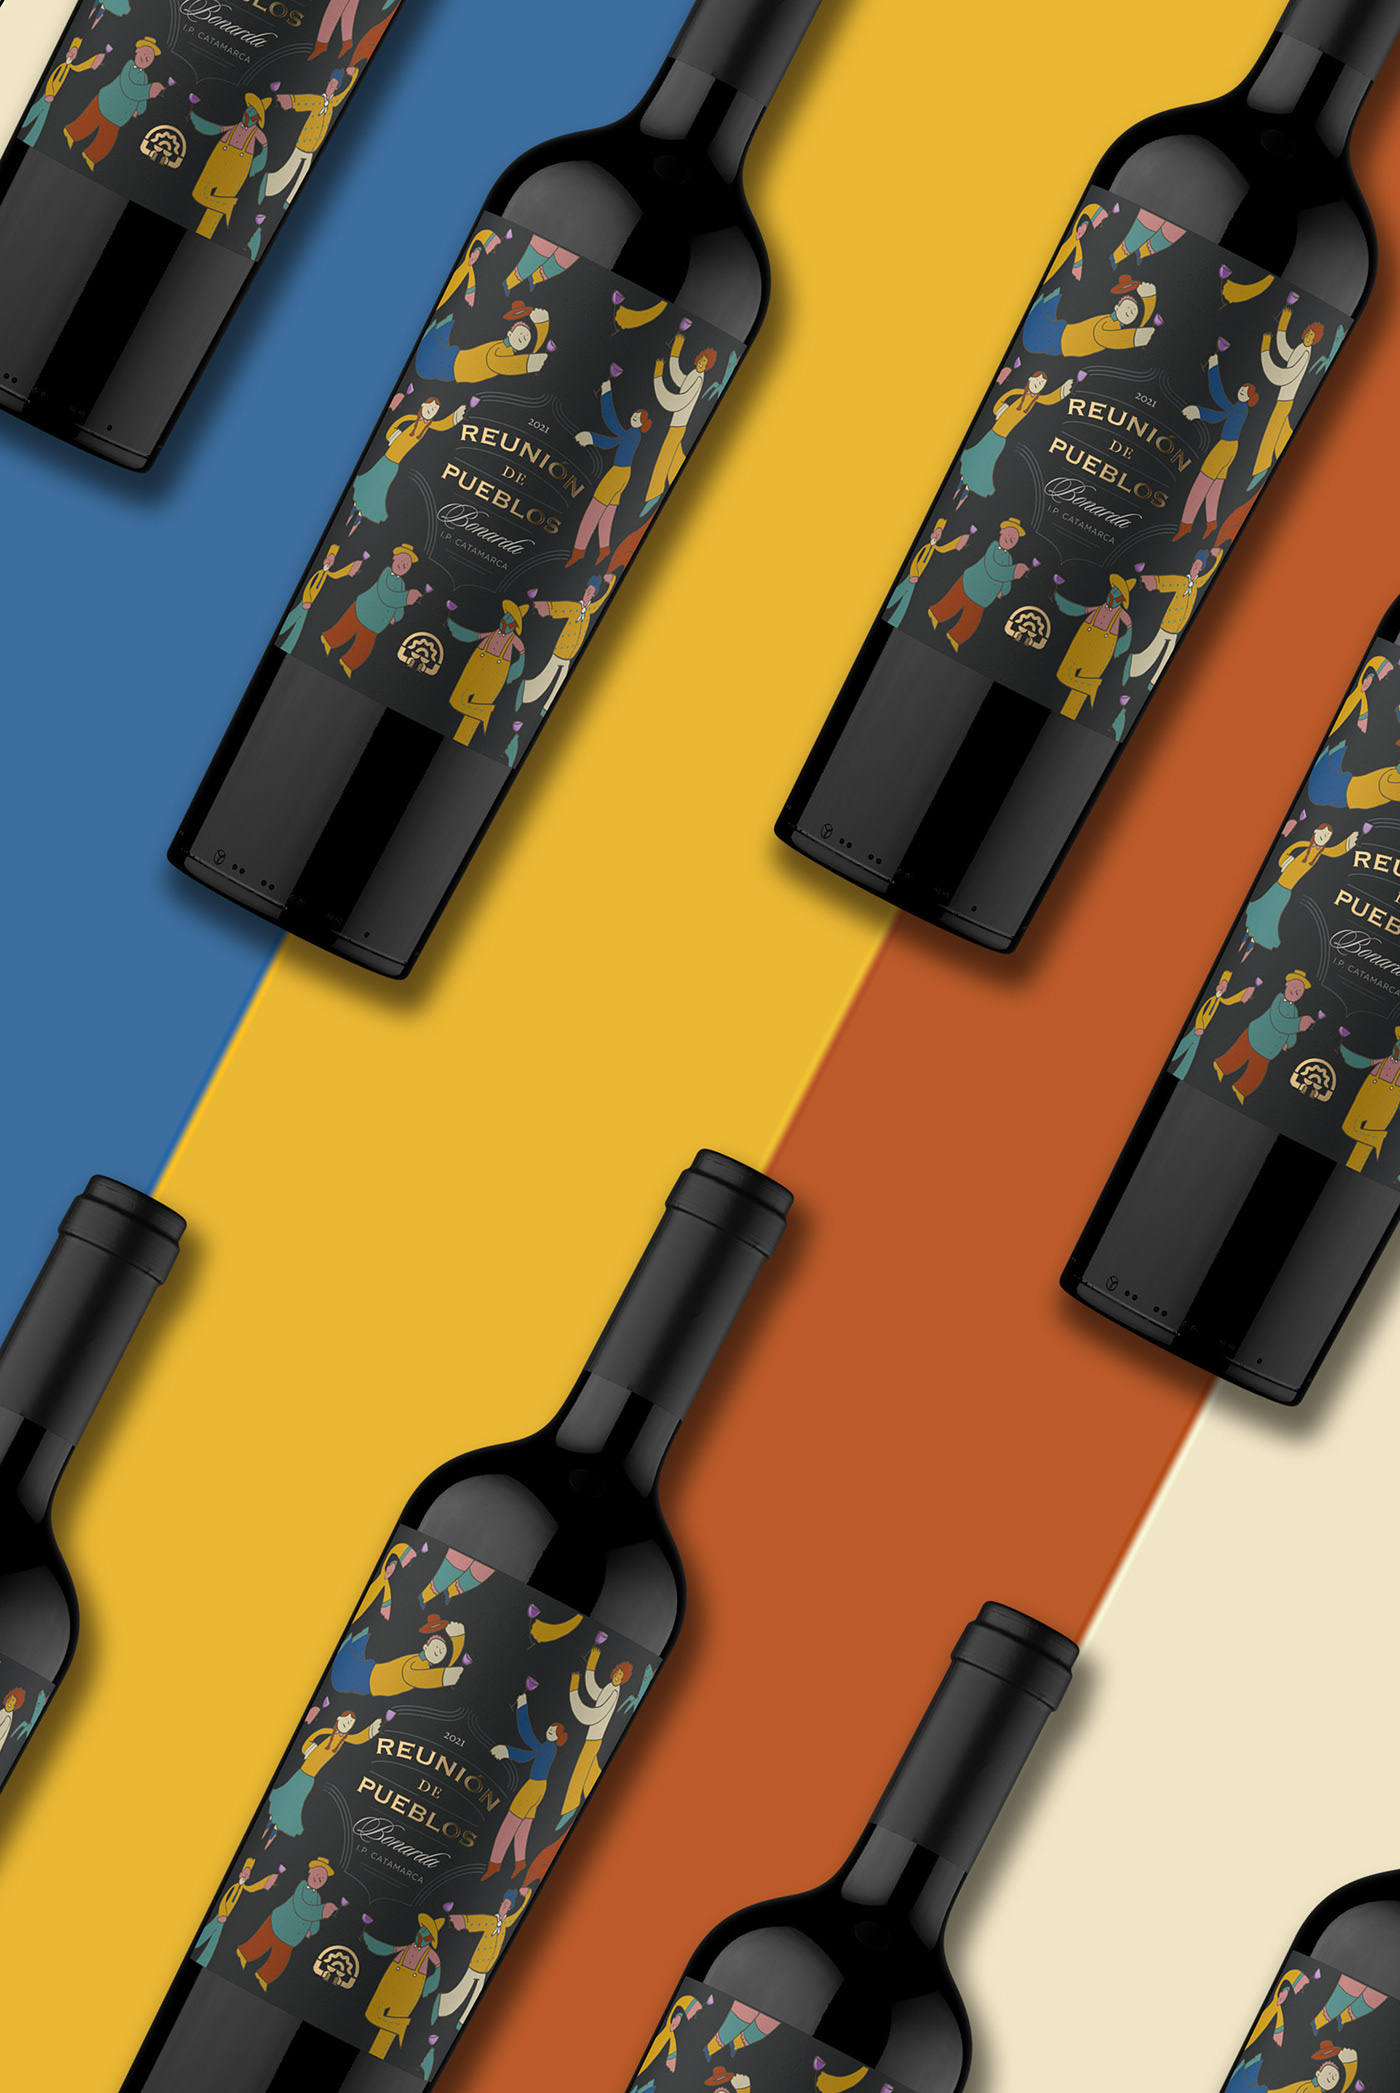 catamarca reunion de pueblos wine packaging design